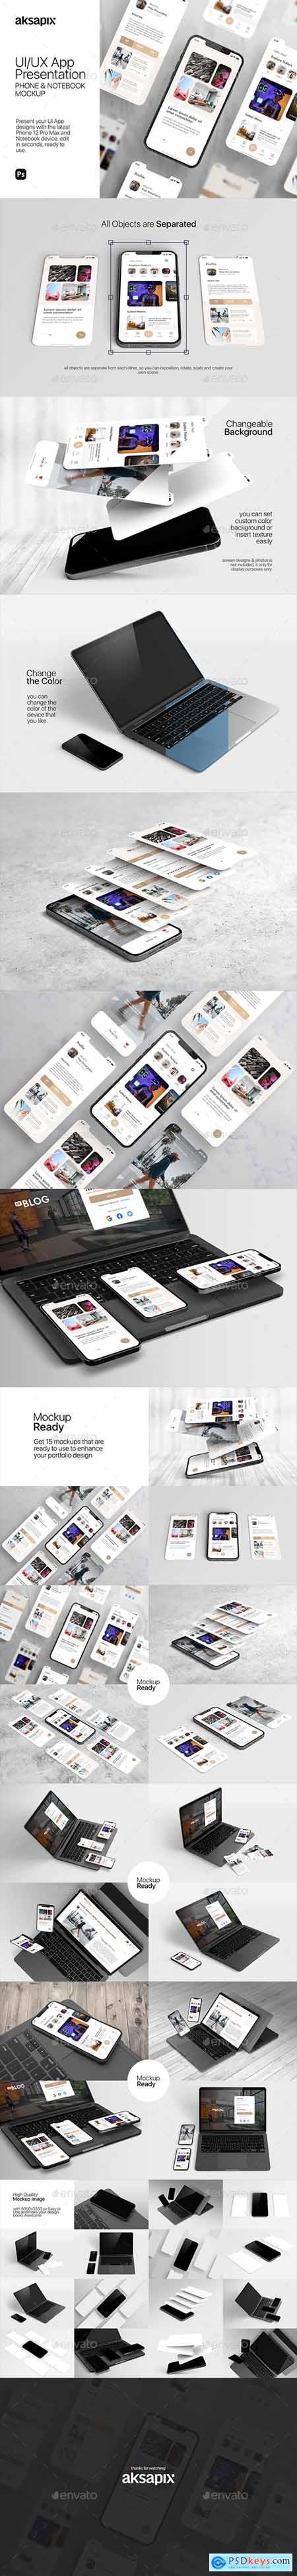 UI-UX App Presentation - Phone & Notebook Mockup 30439812